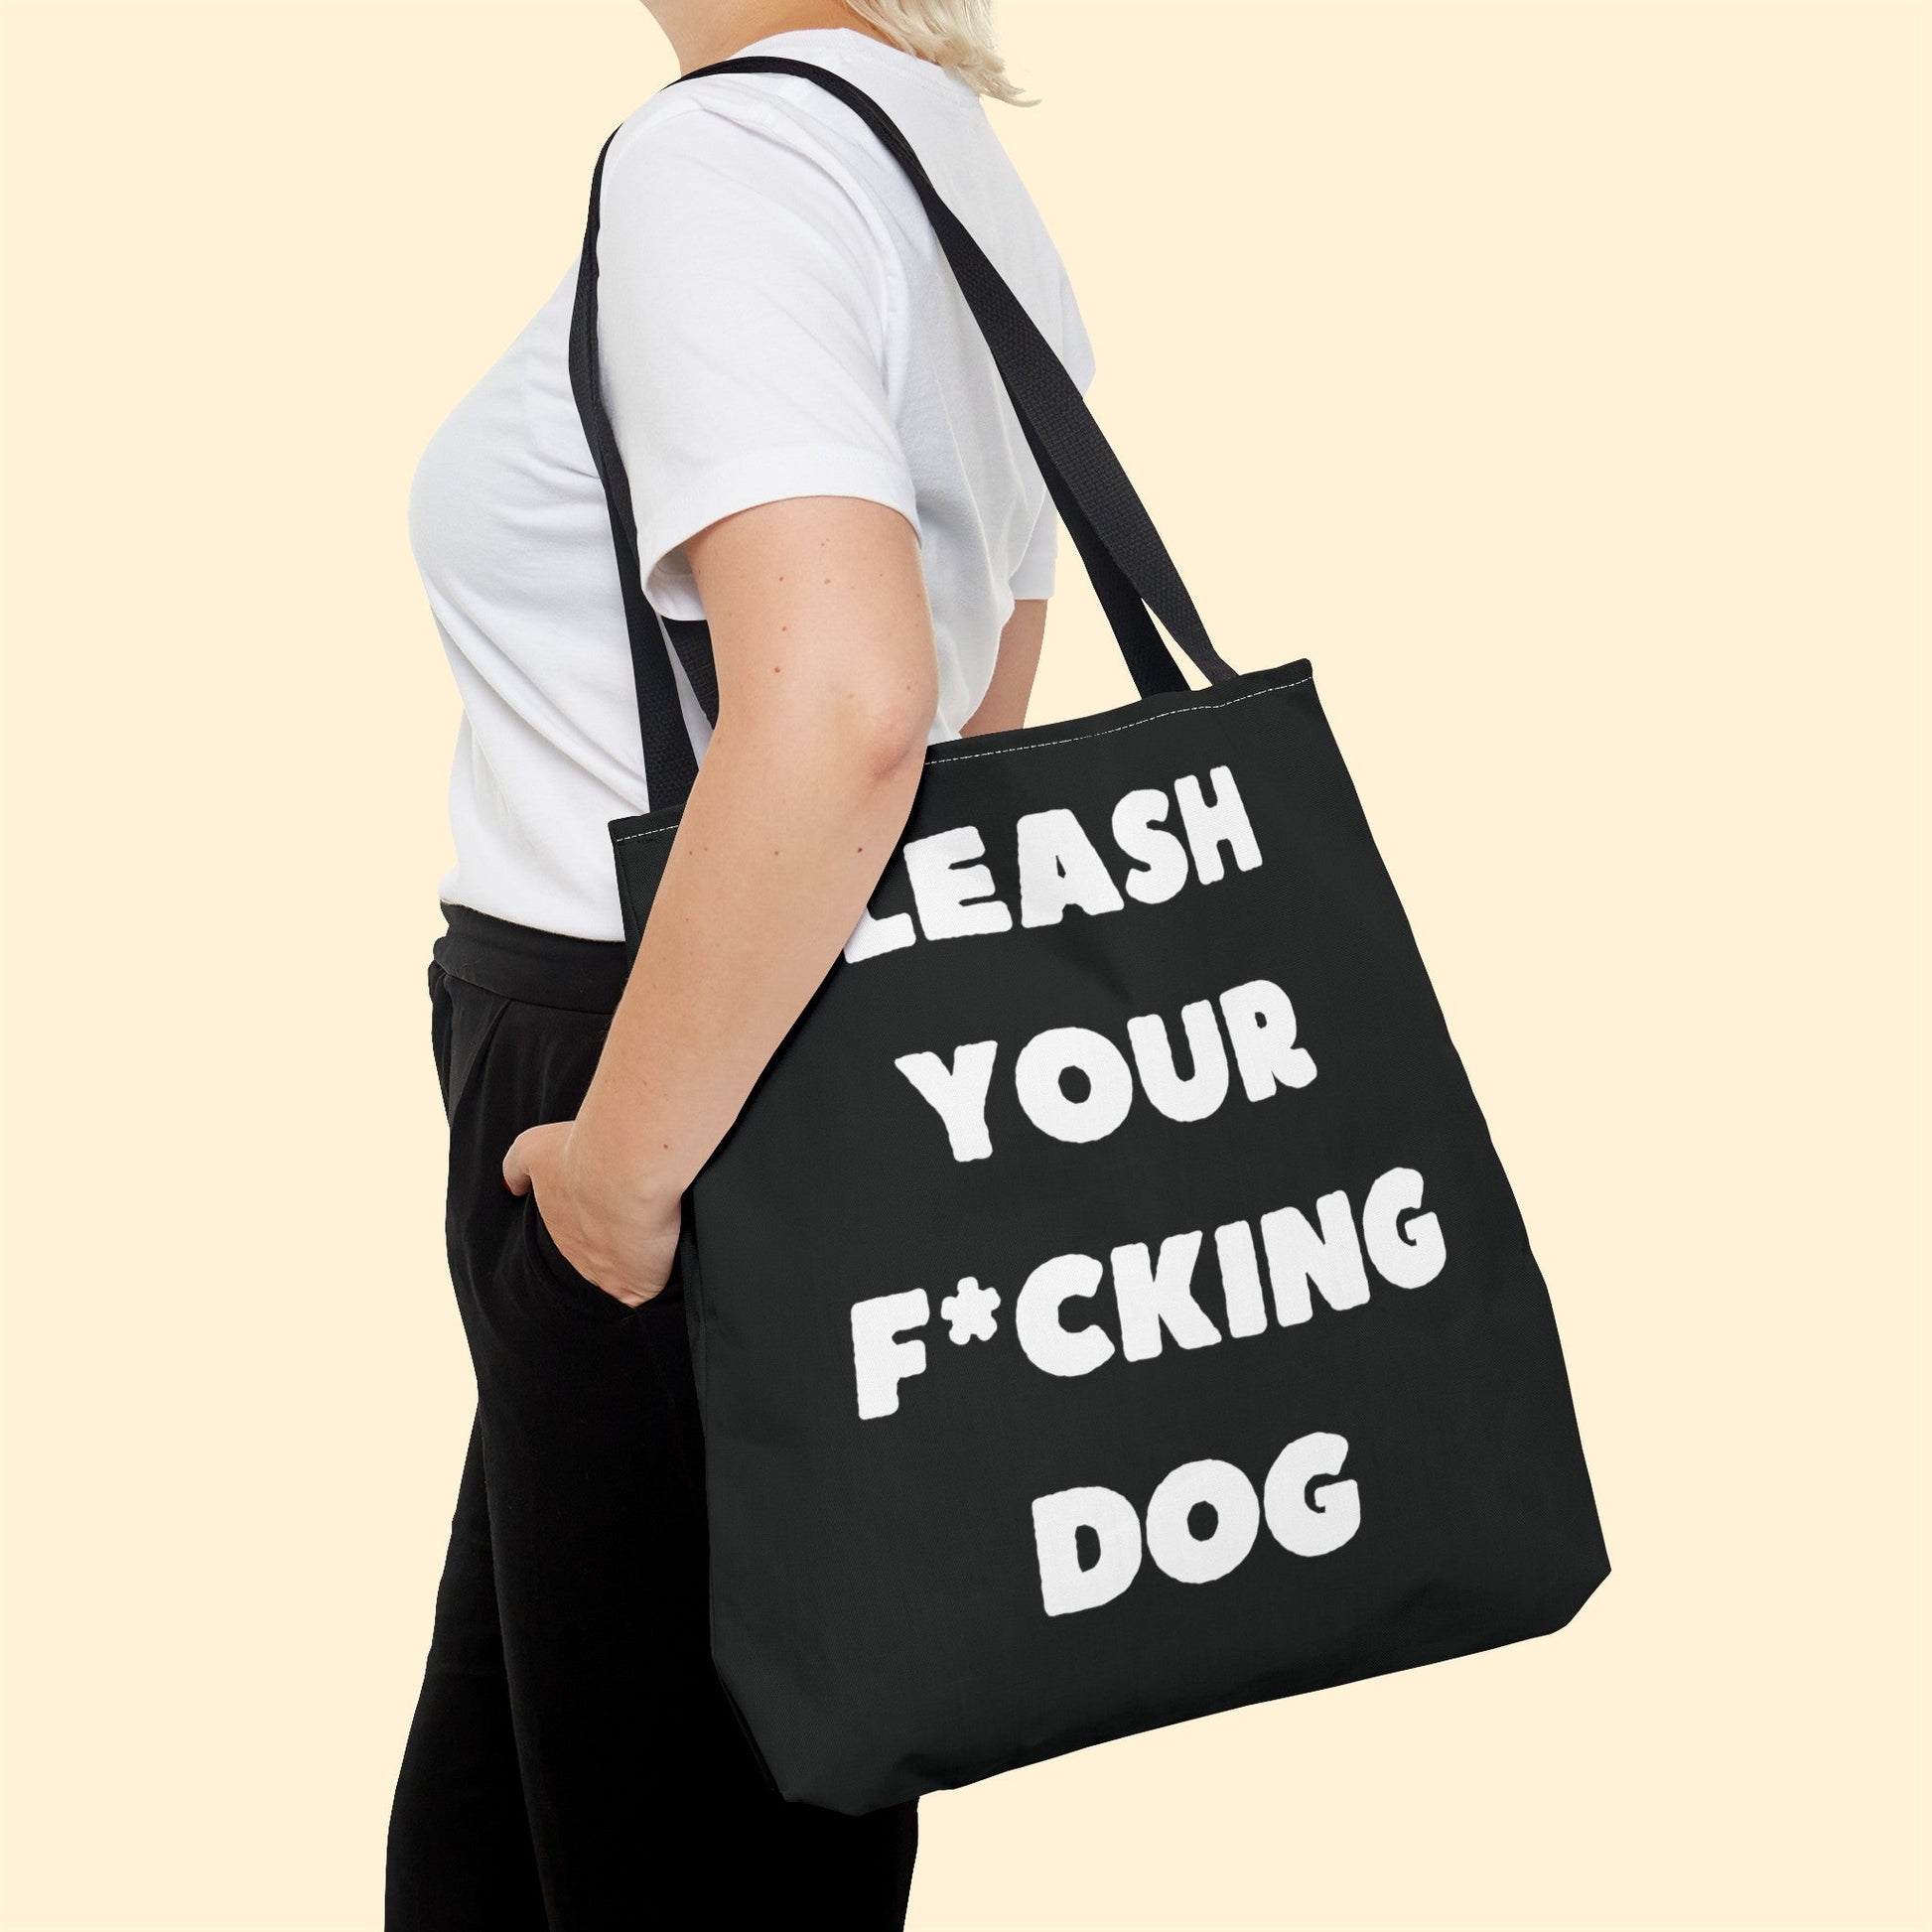 Leash Your F*cking Dog | Tote Bag - Detezi Designs-17671058731520710039